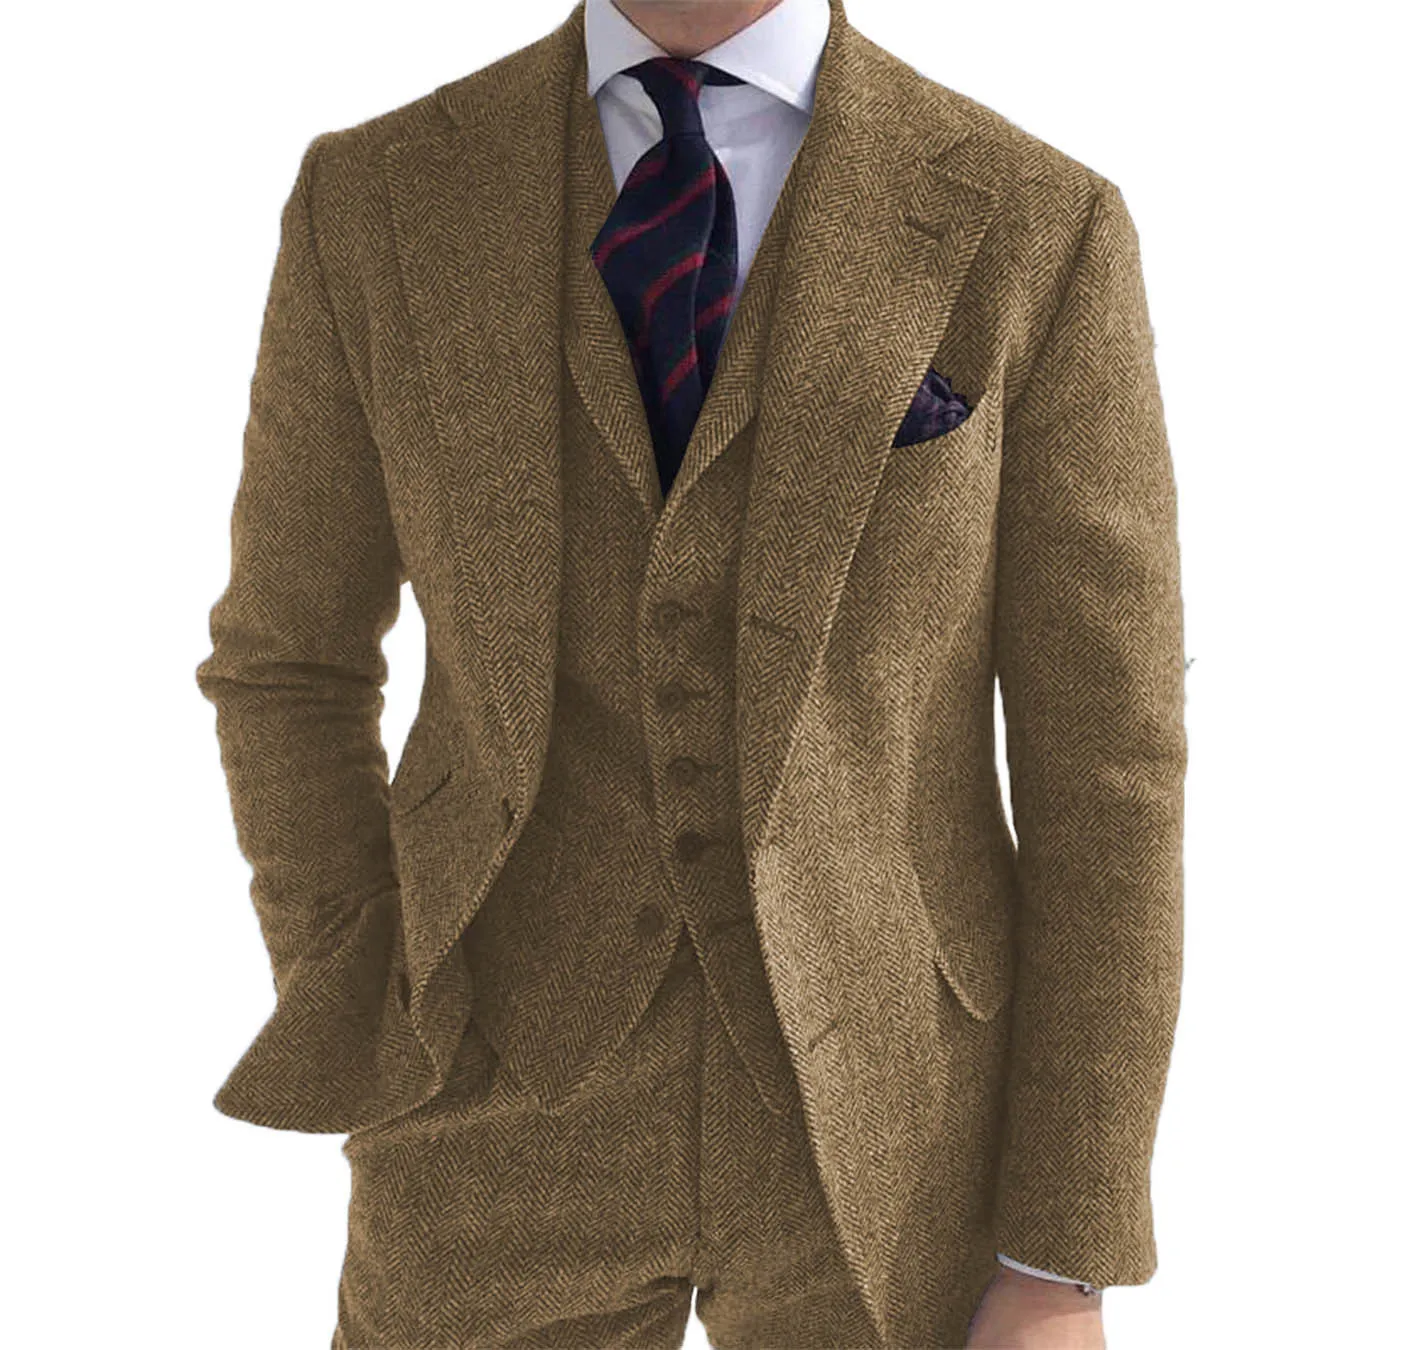 The Raymond Shop Man's Suit Three Button Jacket and Pants - custom size |  eBay